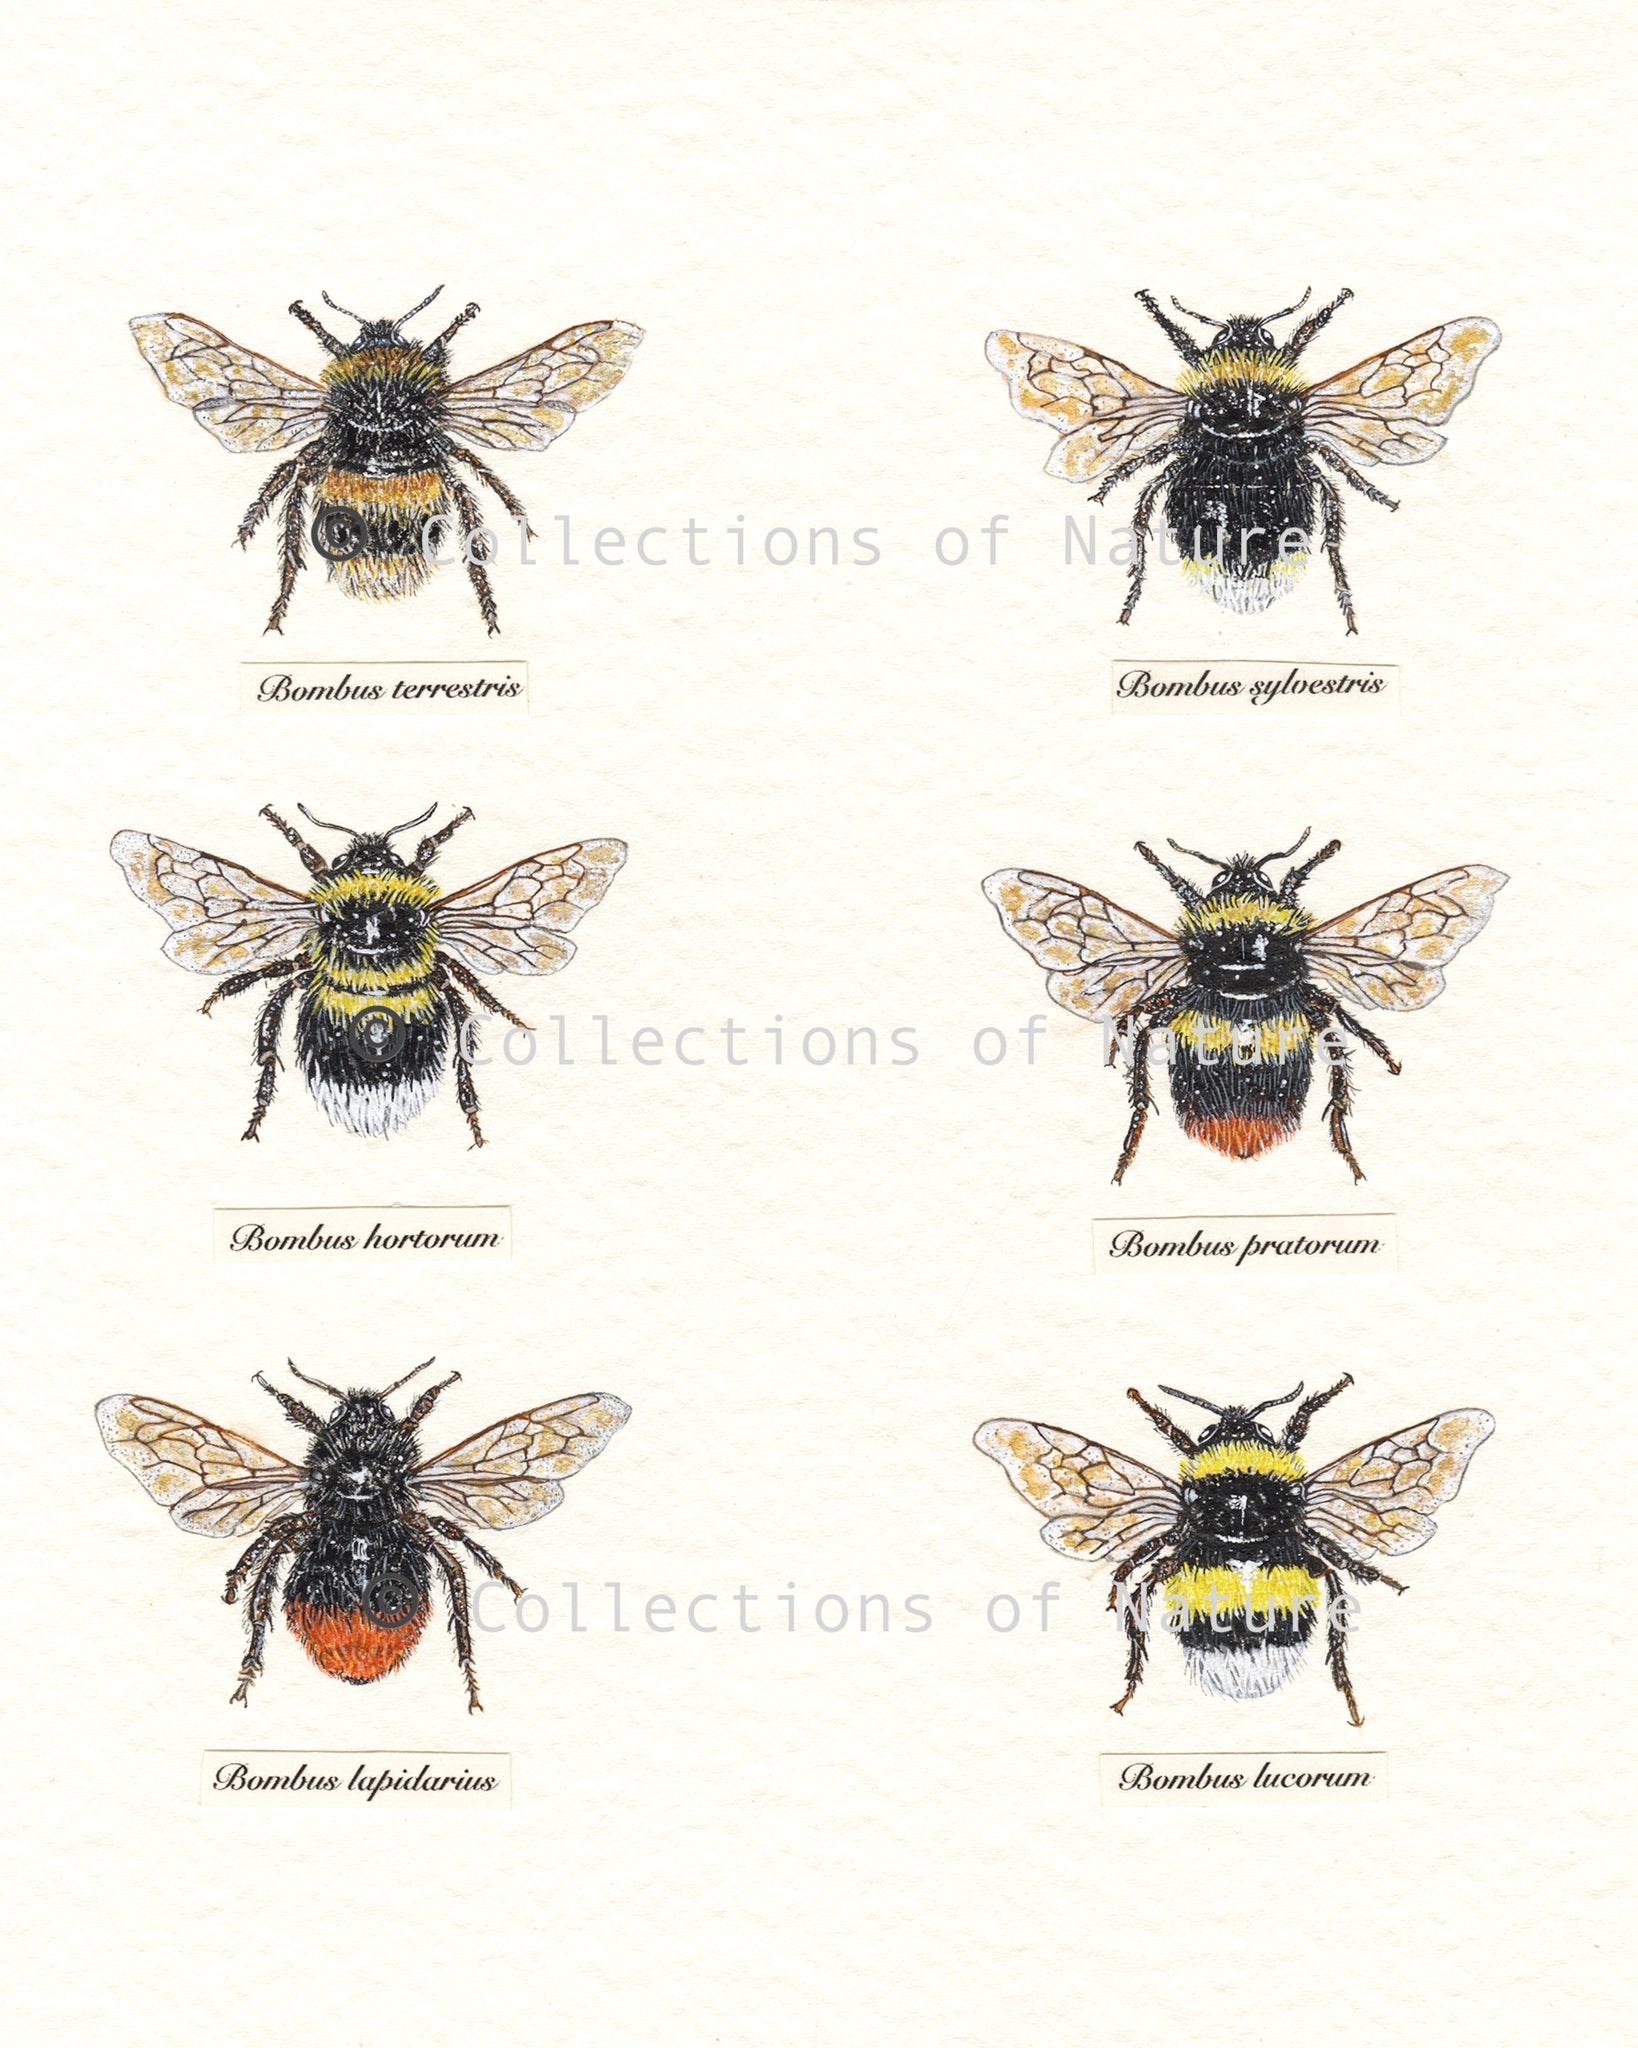 Britain's Bees I